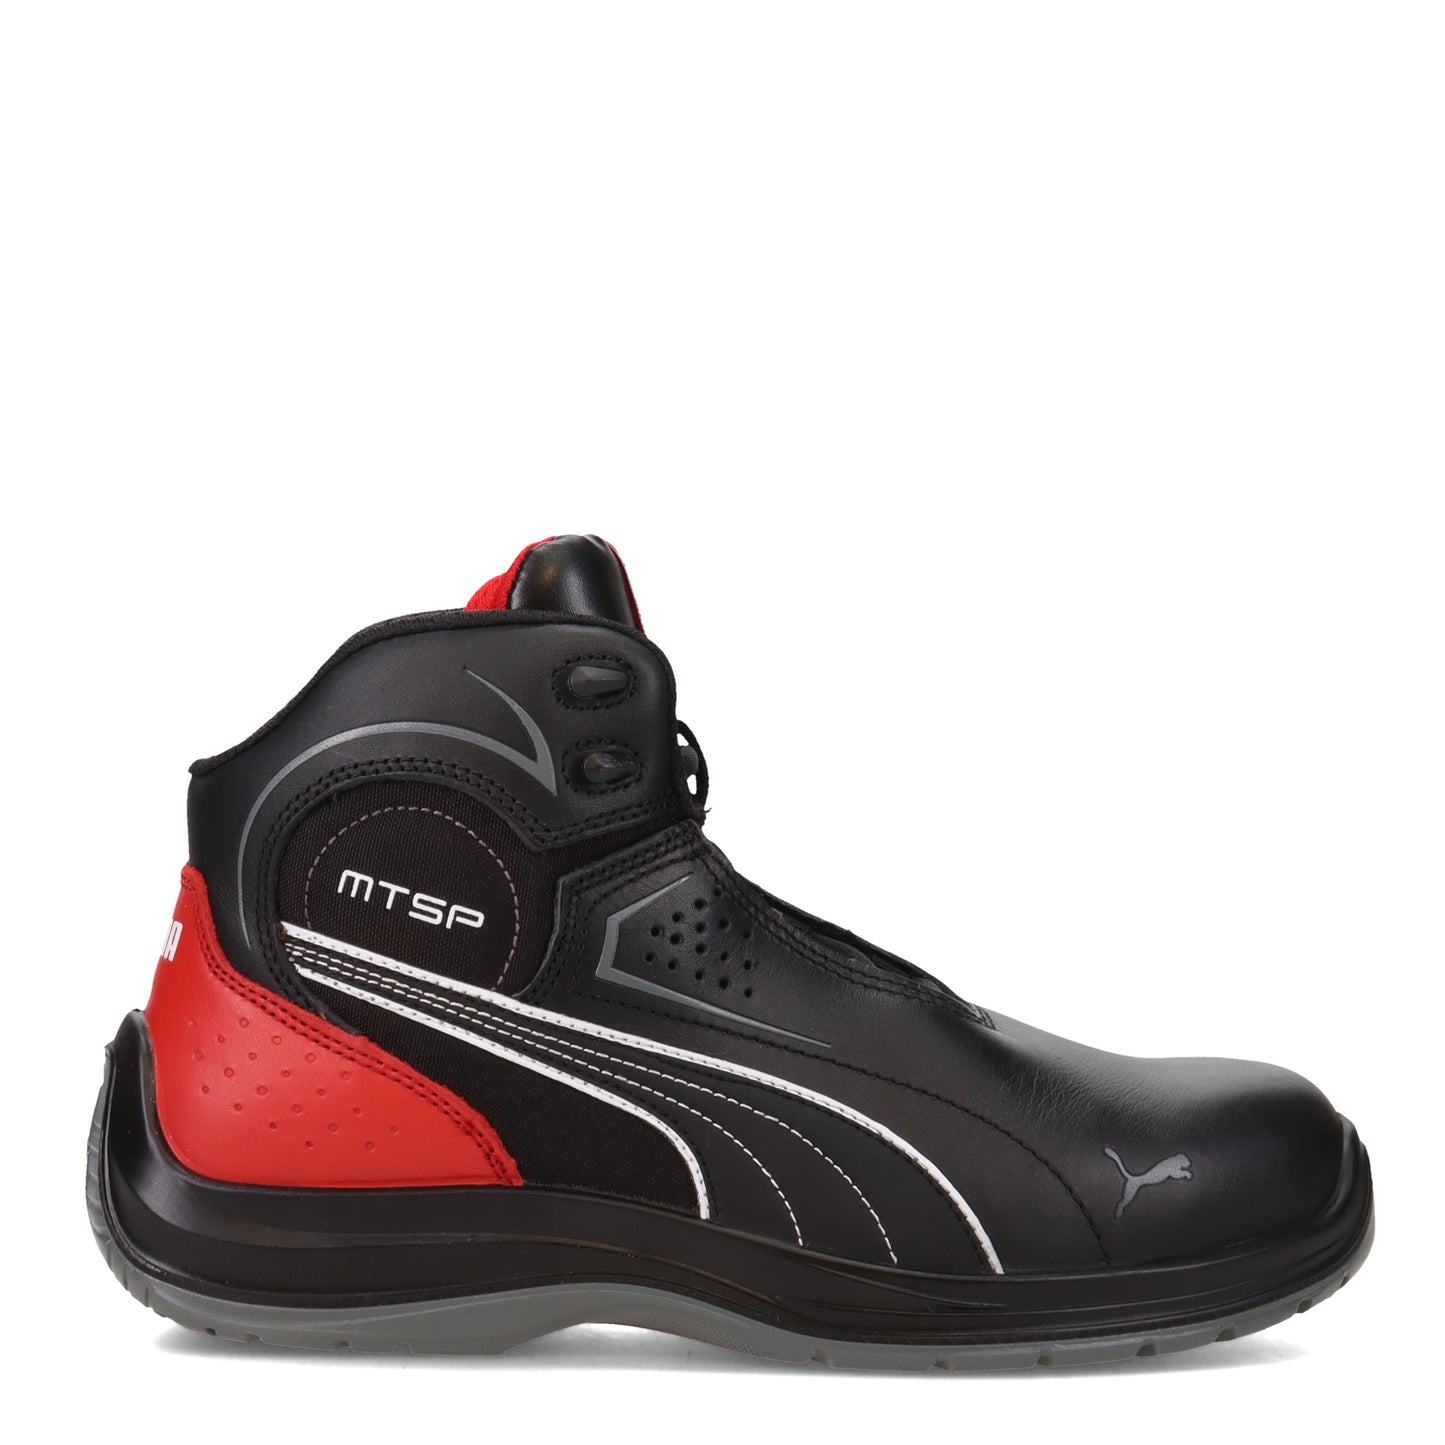 Peltz Shoes  Men's PUMA Safety Touring Mid Boot BLACK 632615